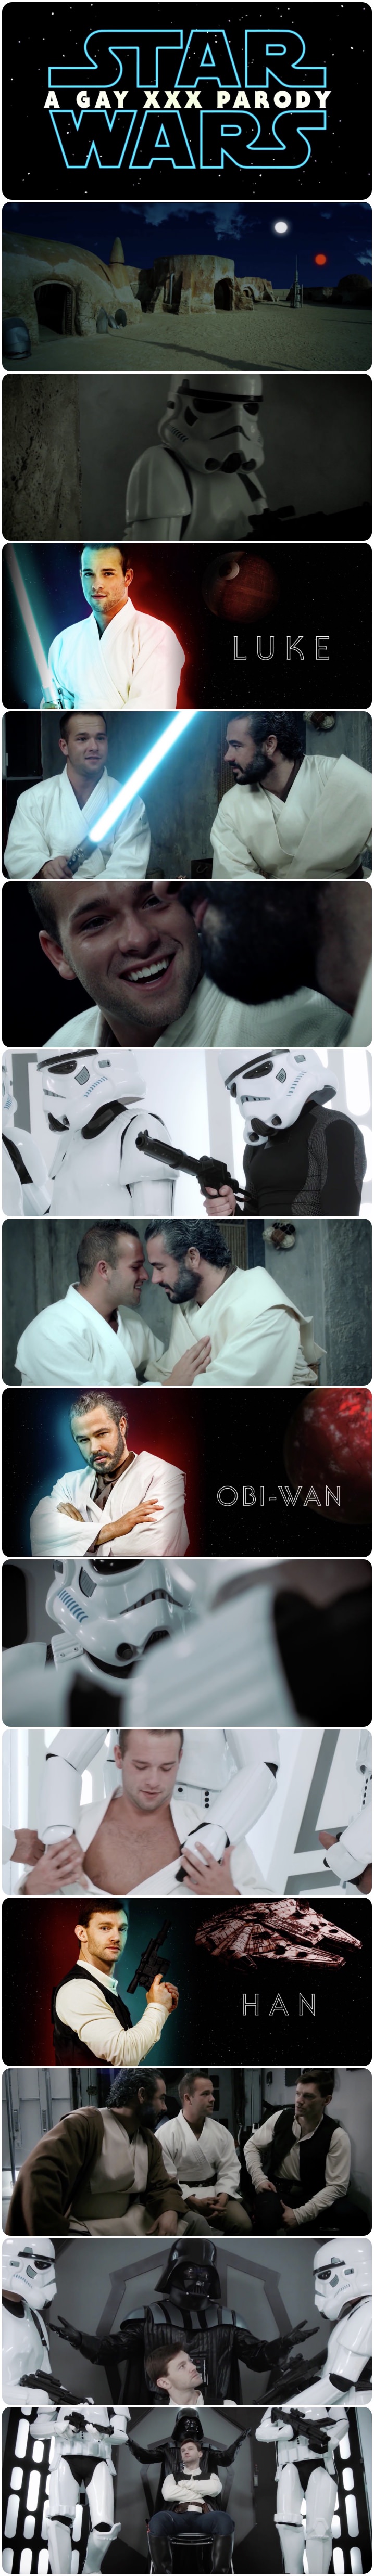 Star Wars A Gay XXX Parody, Men.com